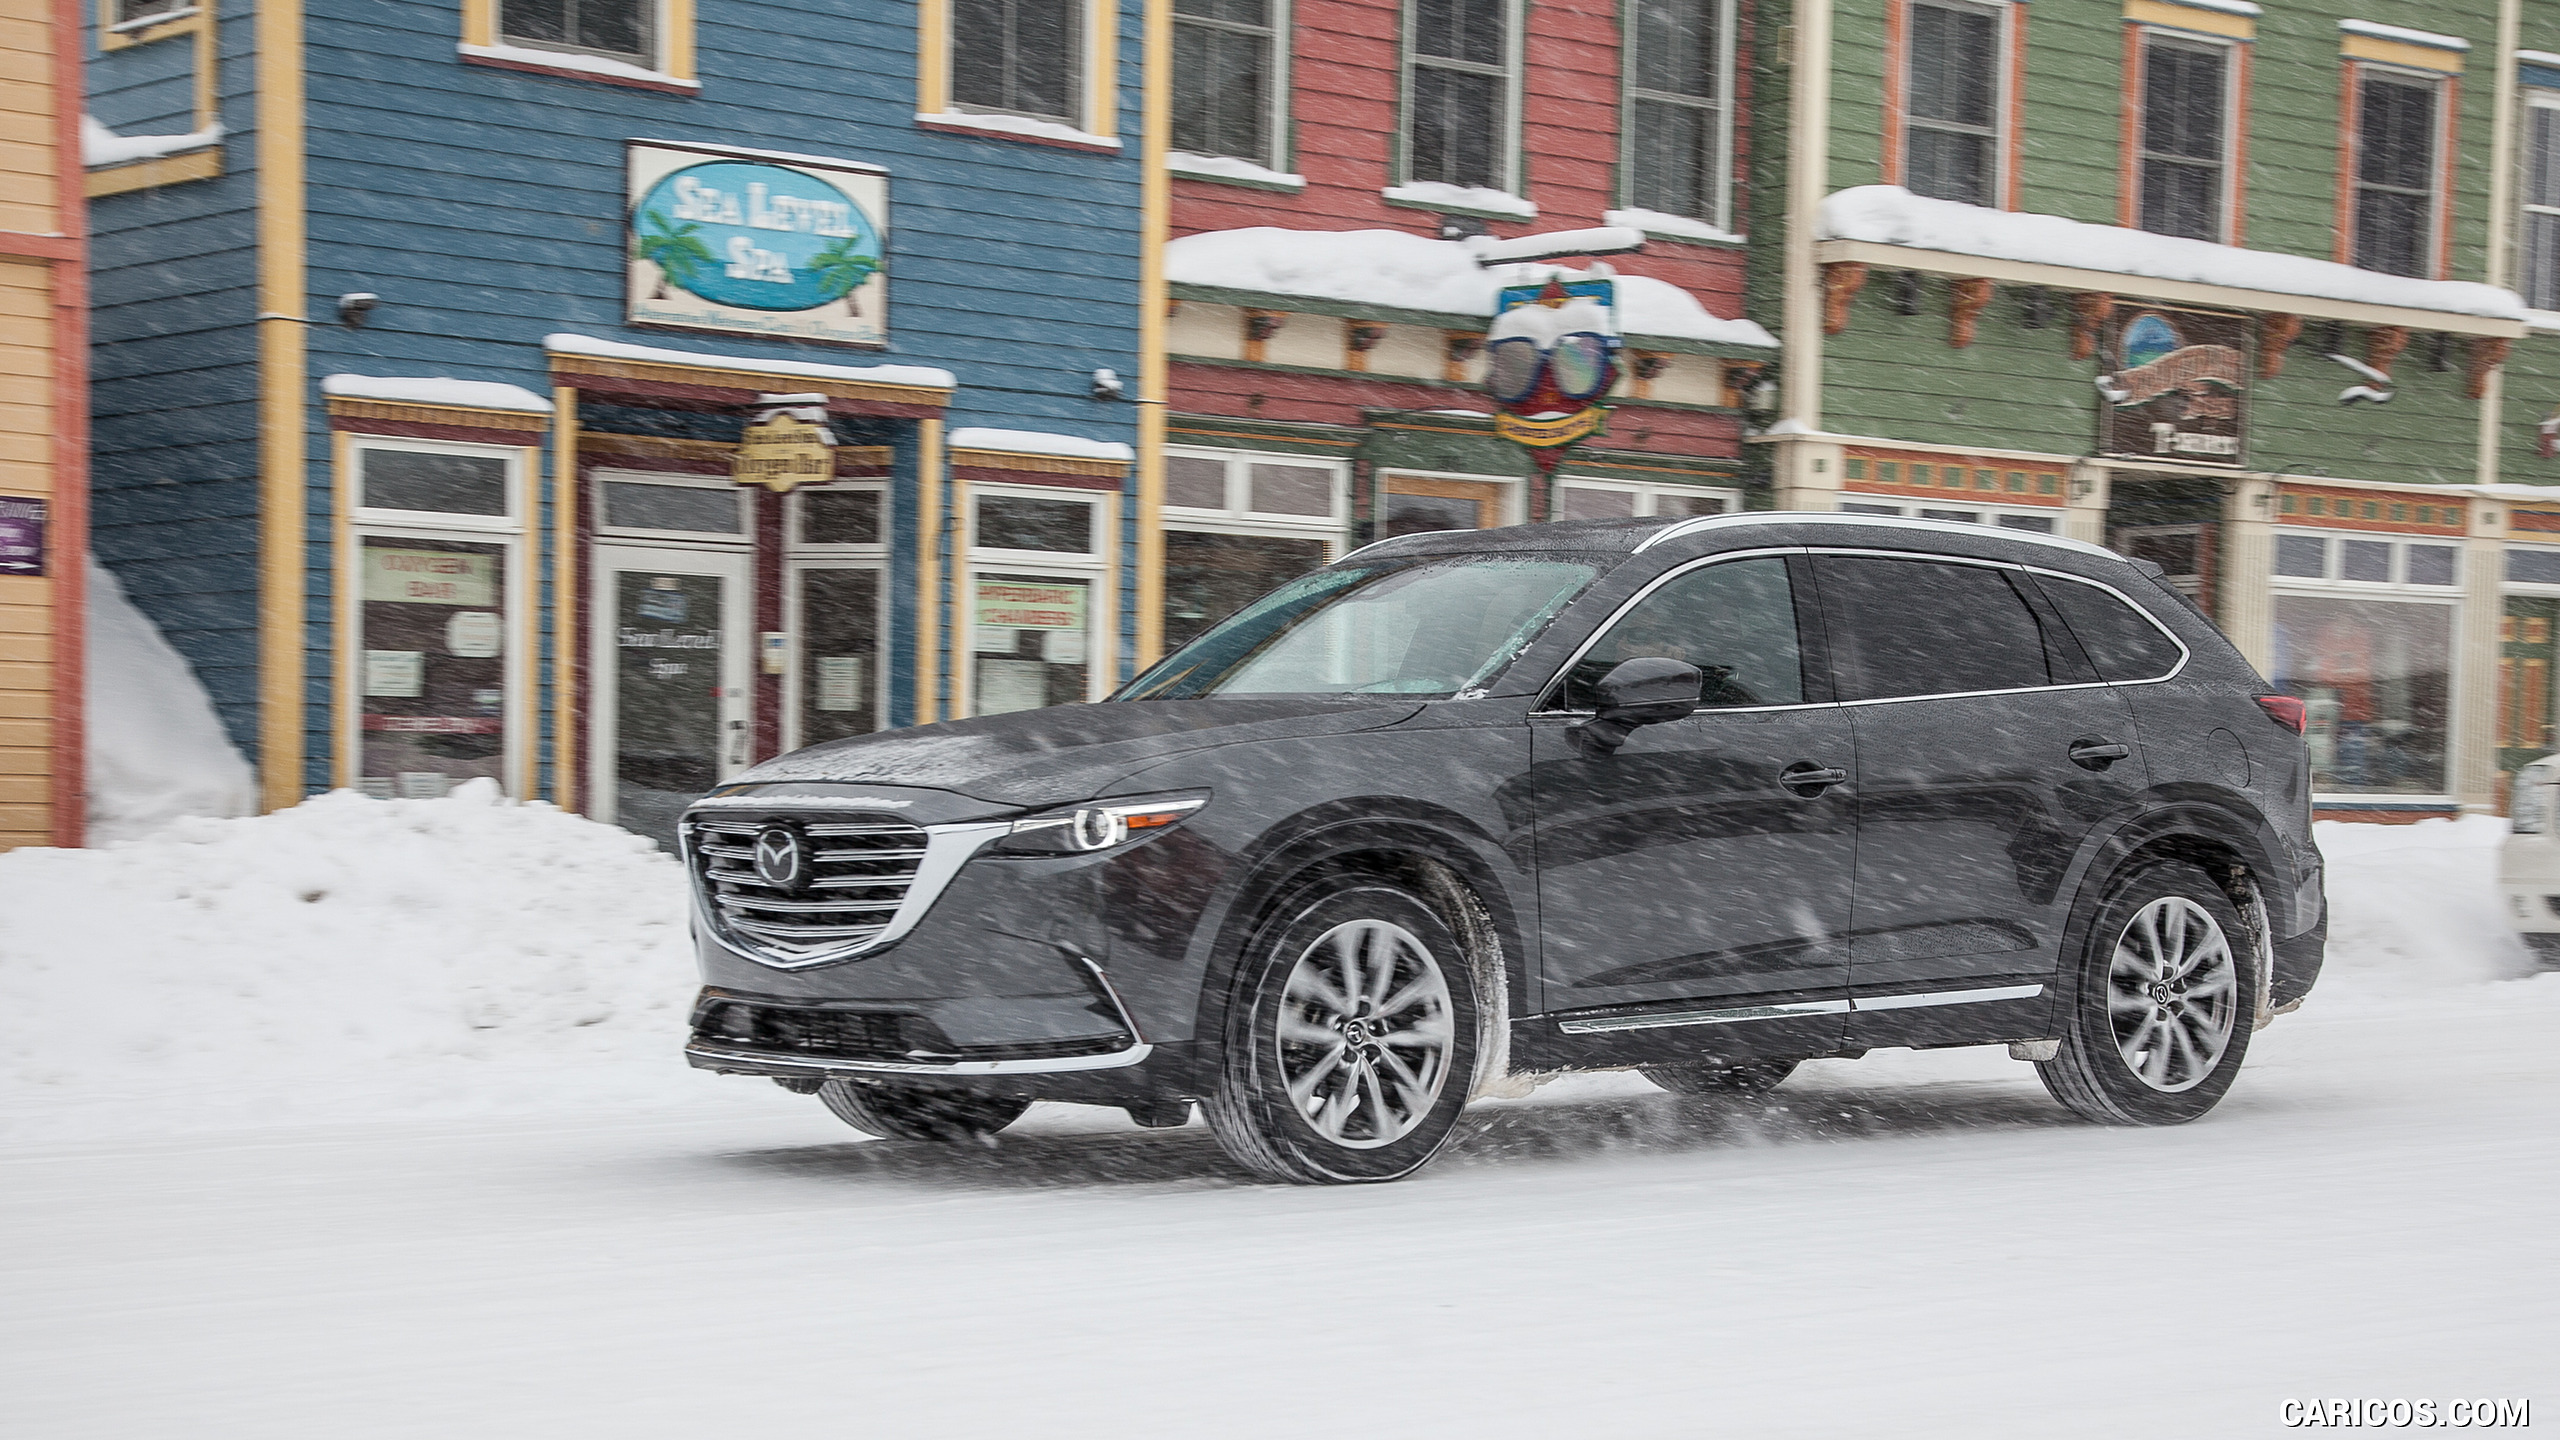 2016 Mazda CX-9 in Snow - Front Three-Quarter, #58 of 69